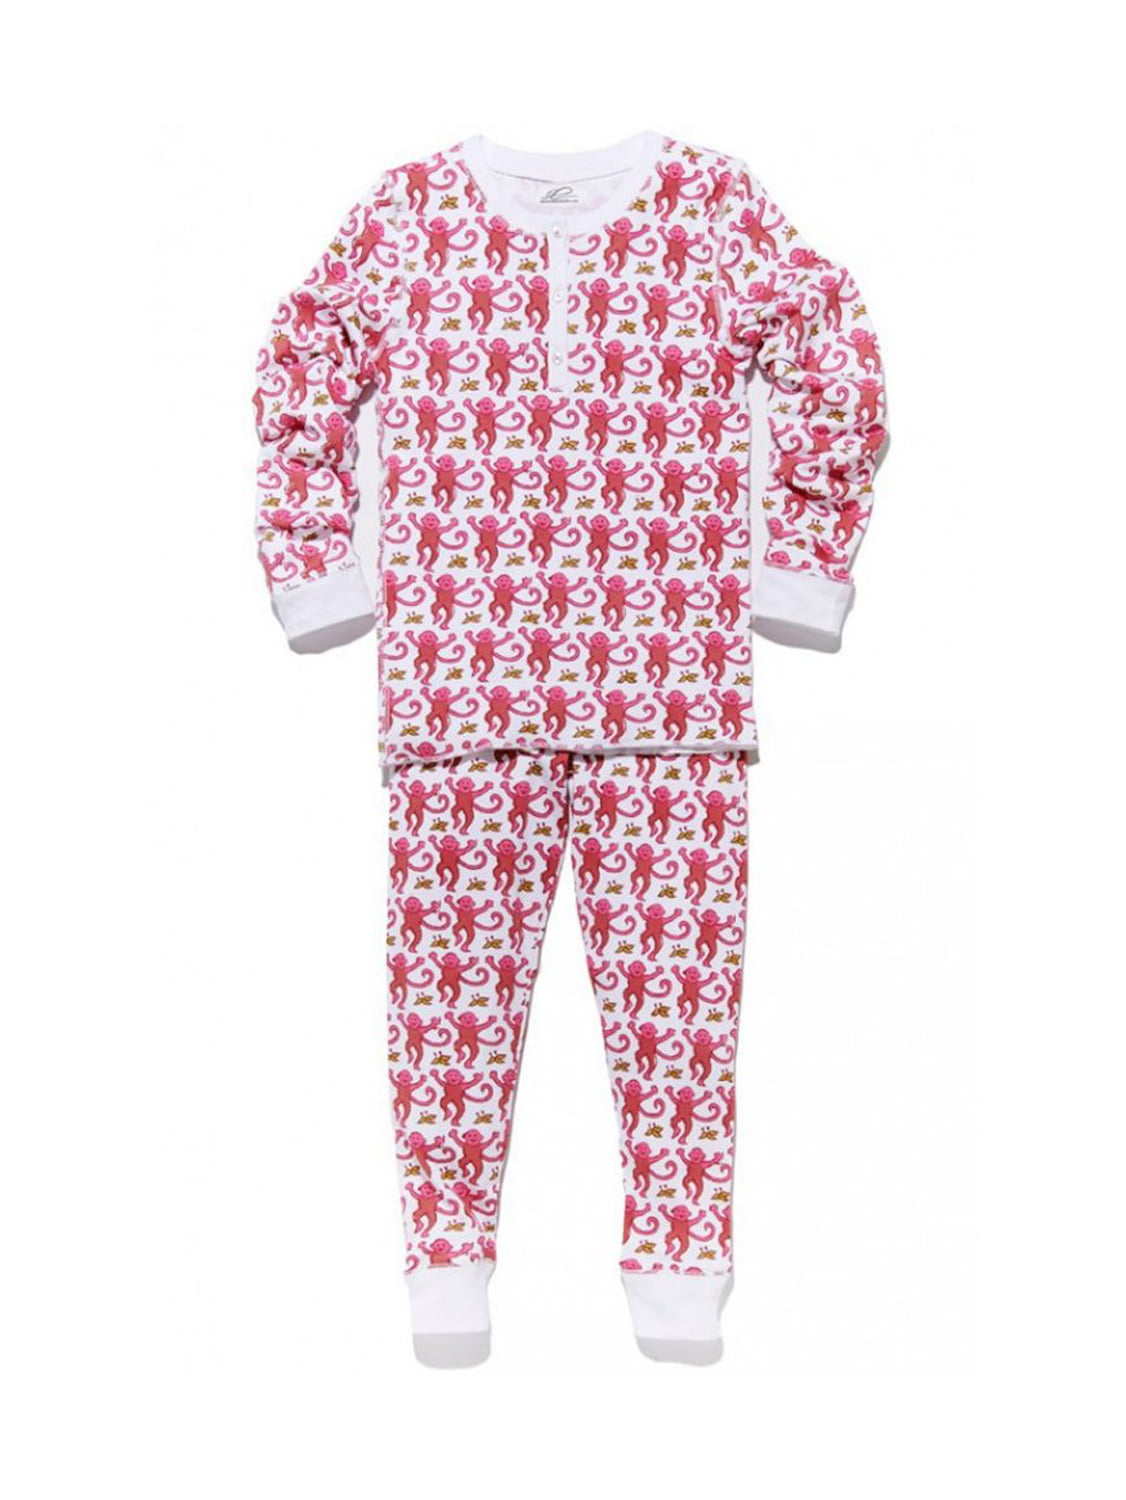 Roberta Roller Rabbit Kids Monkey Pajamas 14 Years Pink - Walmart.com